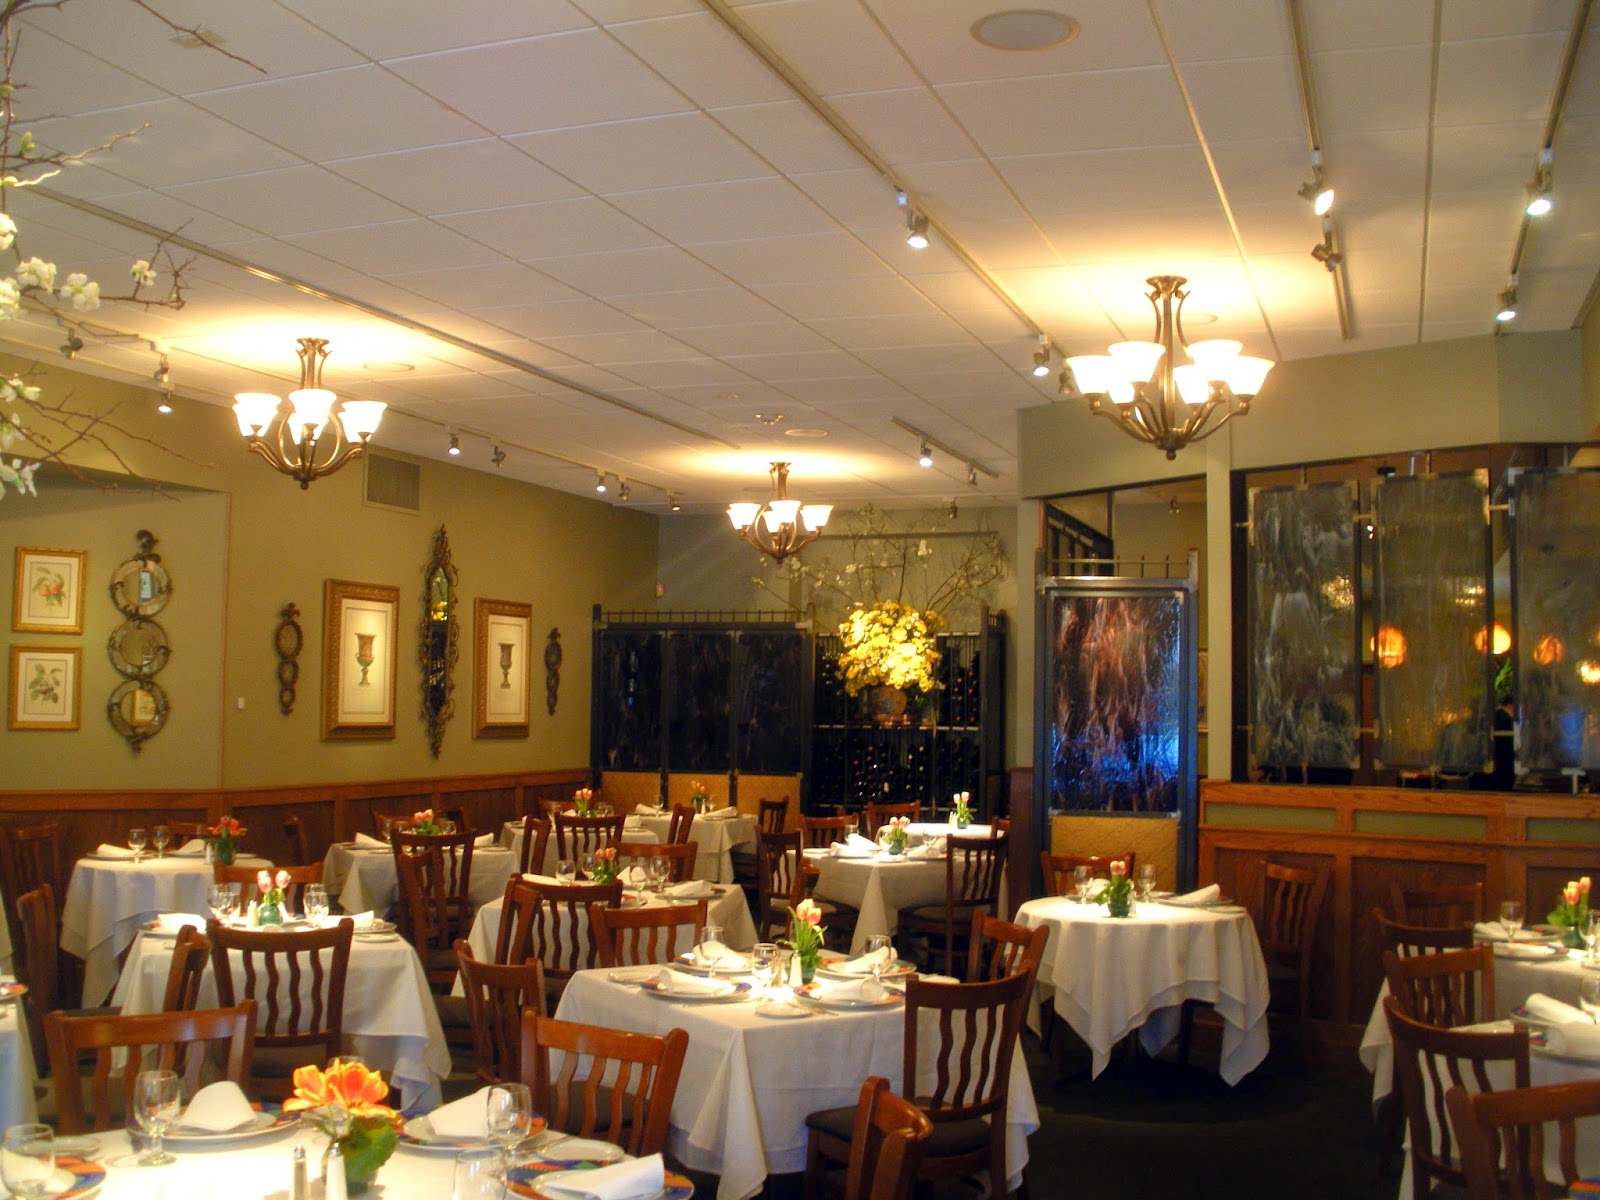 Photo of Stresa Italian Restaurant in Manhasset City, New York, United States - 1 Picture of Restaurant, Food, Point of interest, Establishment, Bar